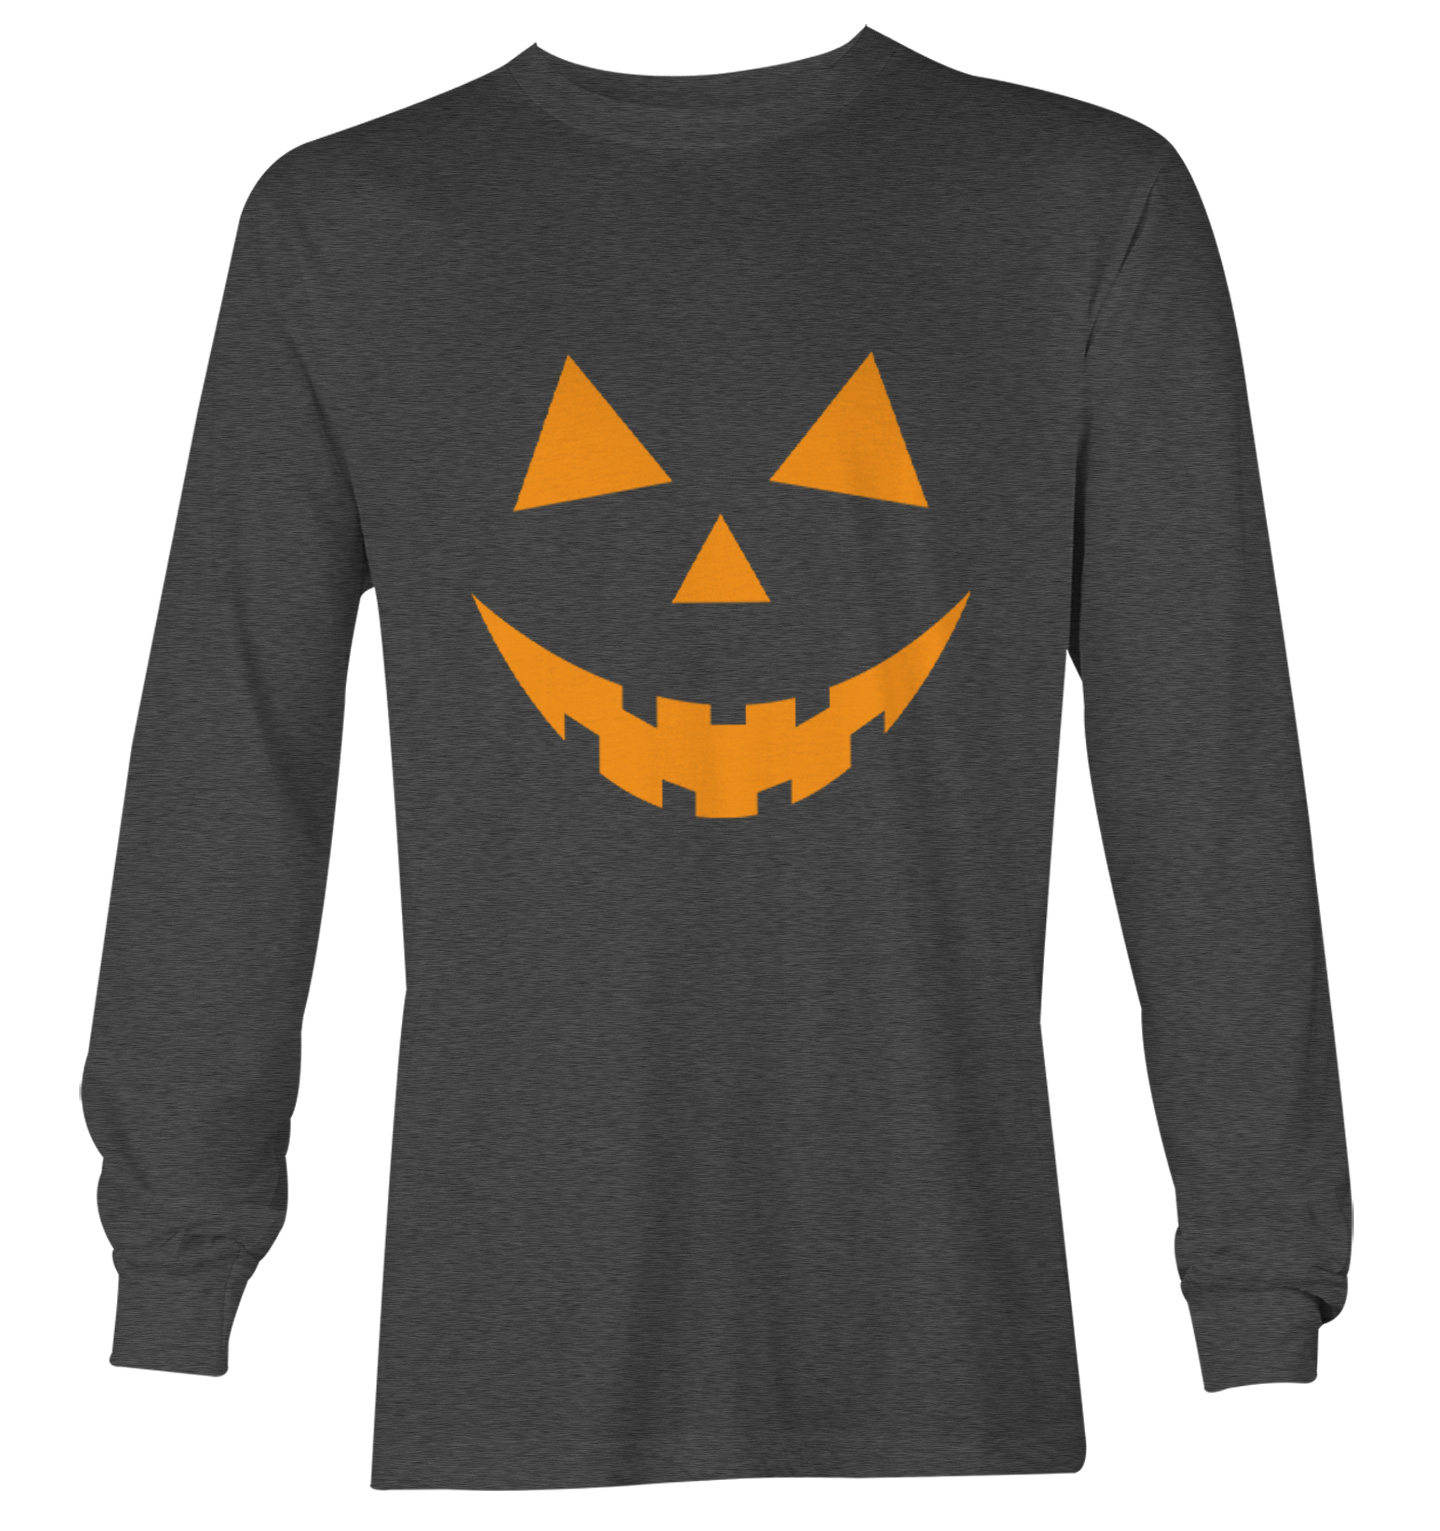 Details about   Jack-o-Lantern Face Festive Halloween October Pumpkin Carving Youth Raglan Shirt 